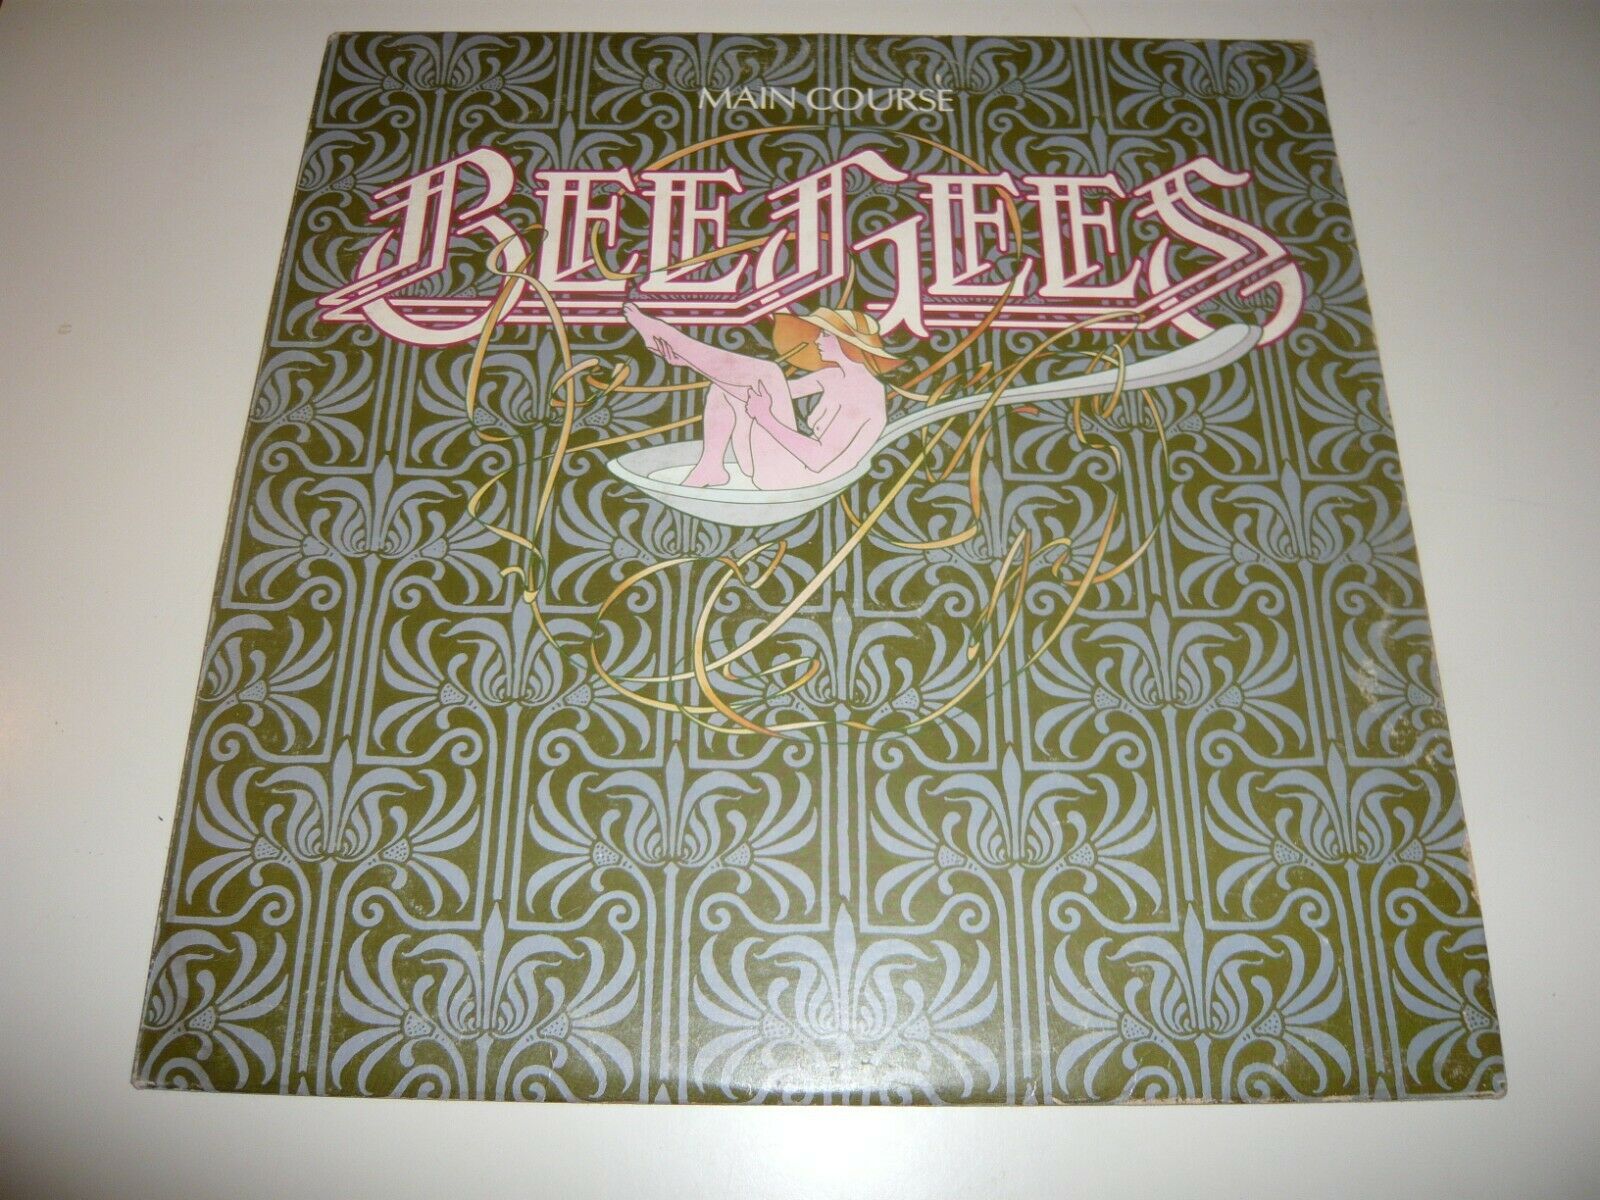 Bee Gees Main Course Lp Vinyl Record Album Jive Talkin' Nights On Broadway